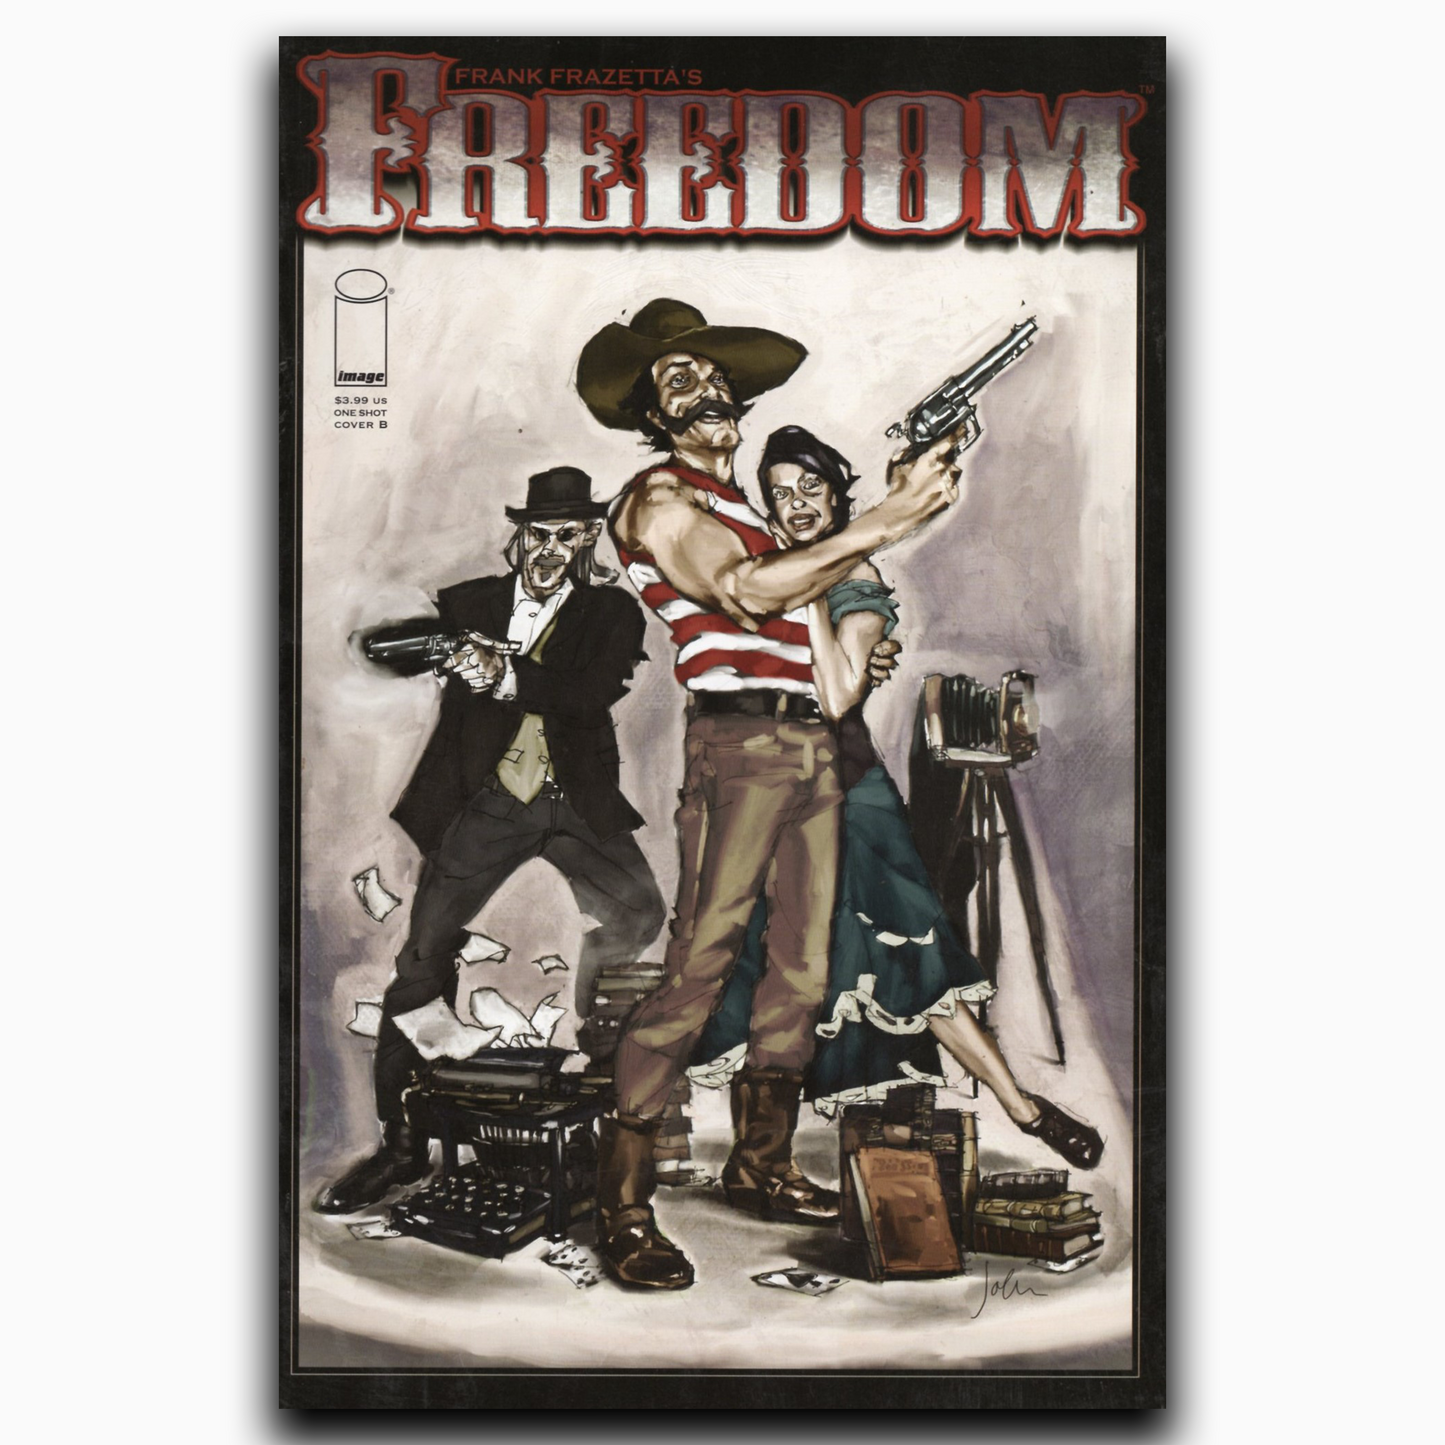 Frazetta's Freedom Image Comic